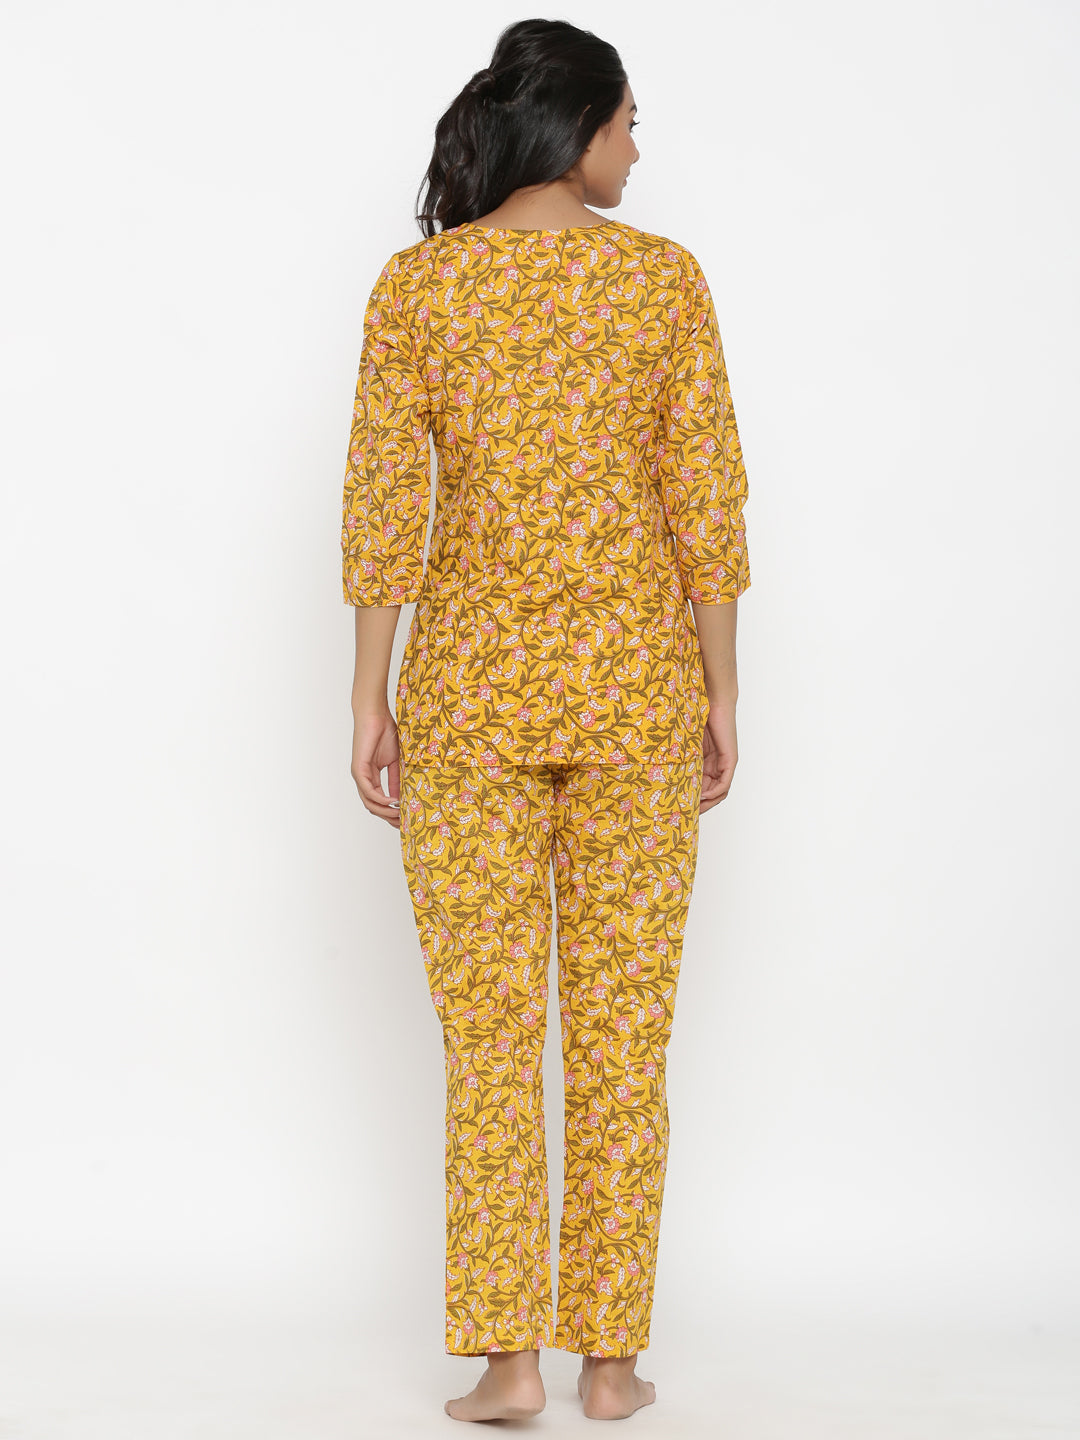 Yellow Block Printed Pyjama Set